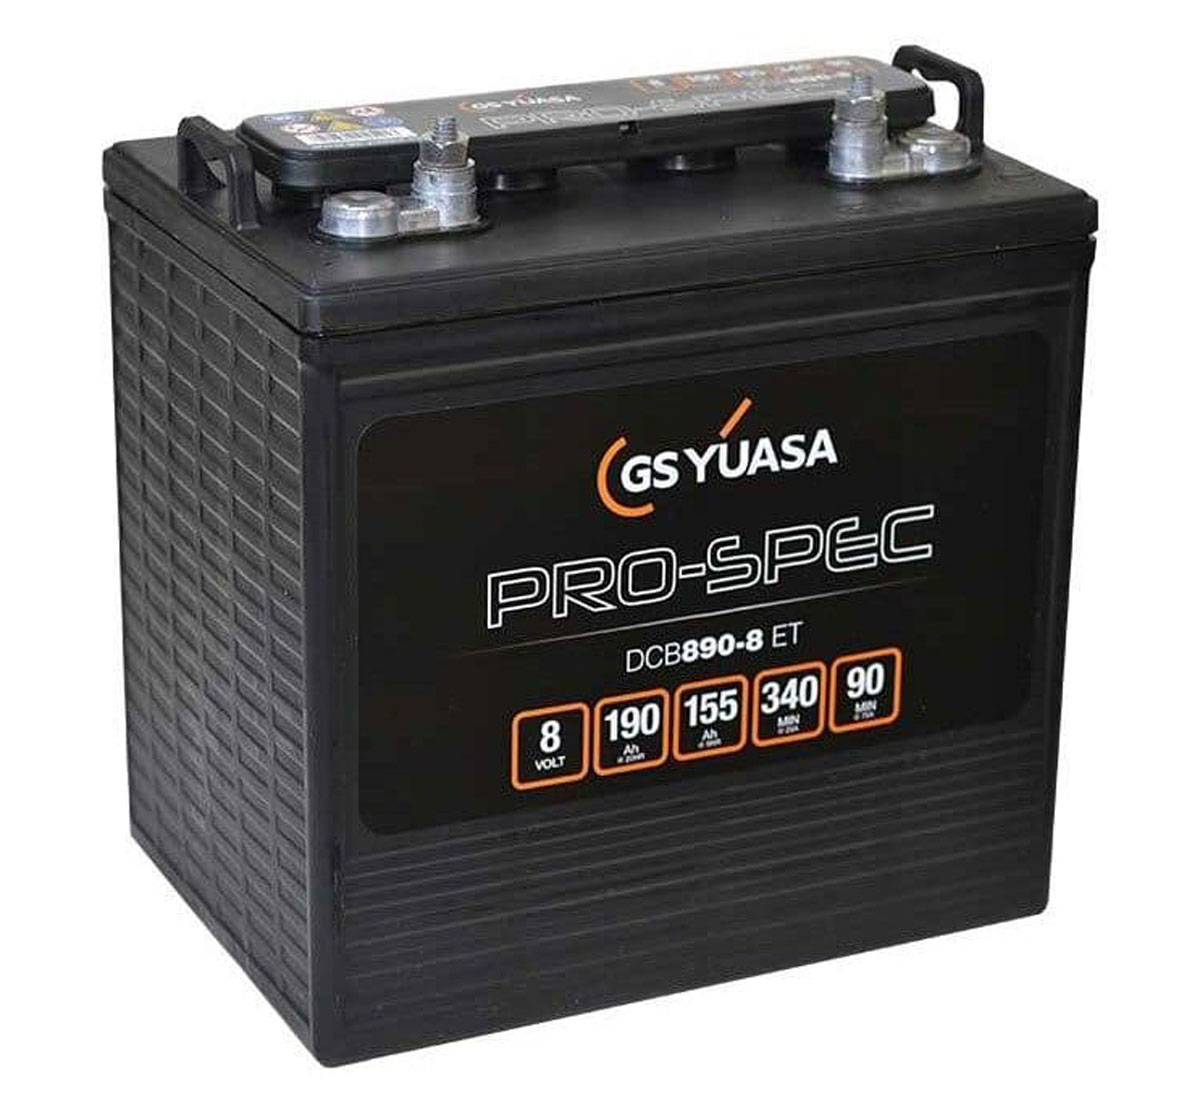 Yuasa Pro Spec DCB890-8 8V 190Ah Battery